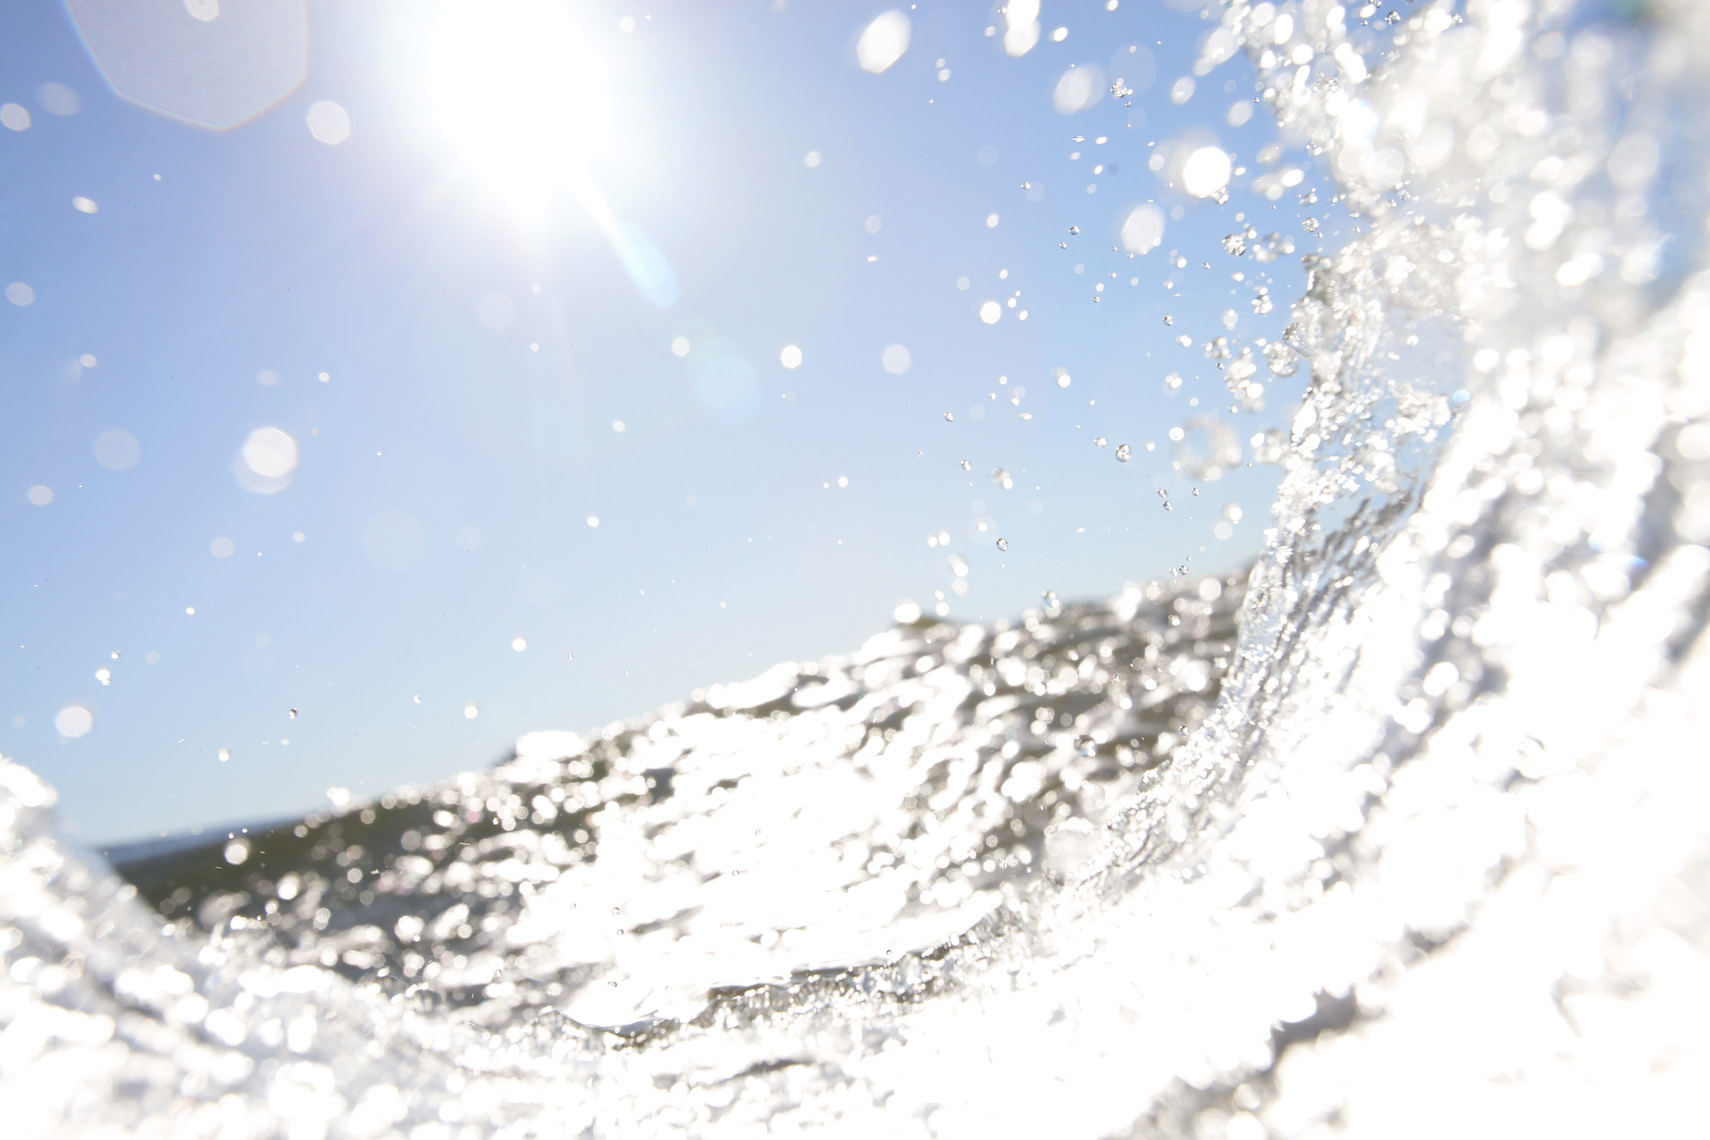 swirling water splash wave_MG_9400_Robert-Holland_BFS.jpg